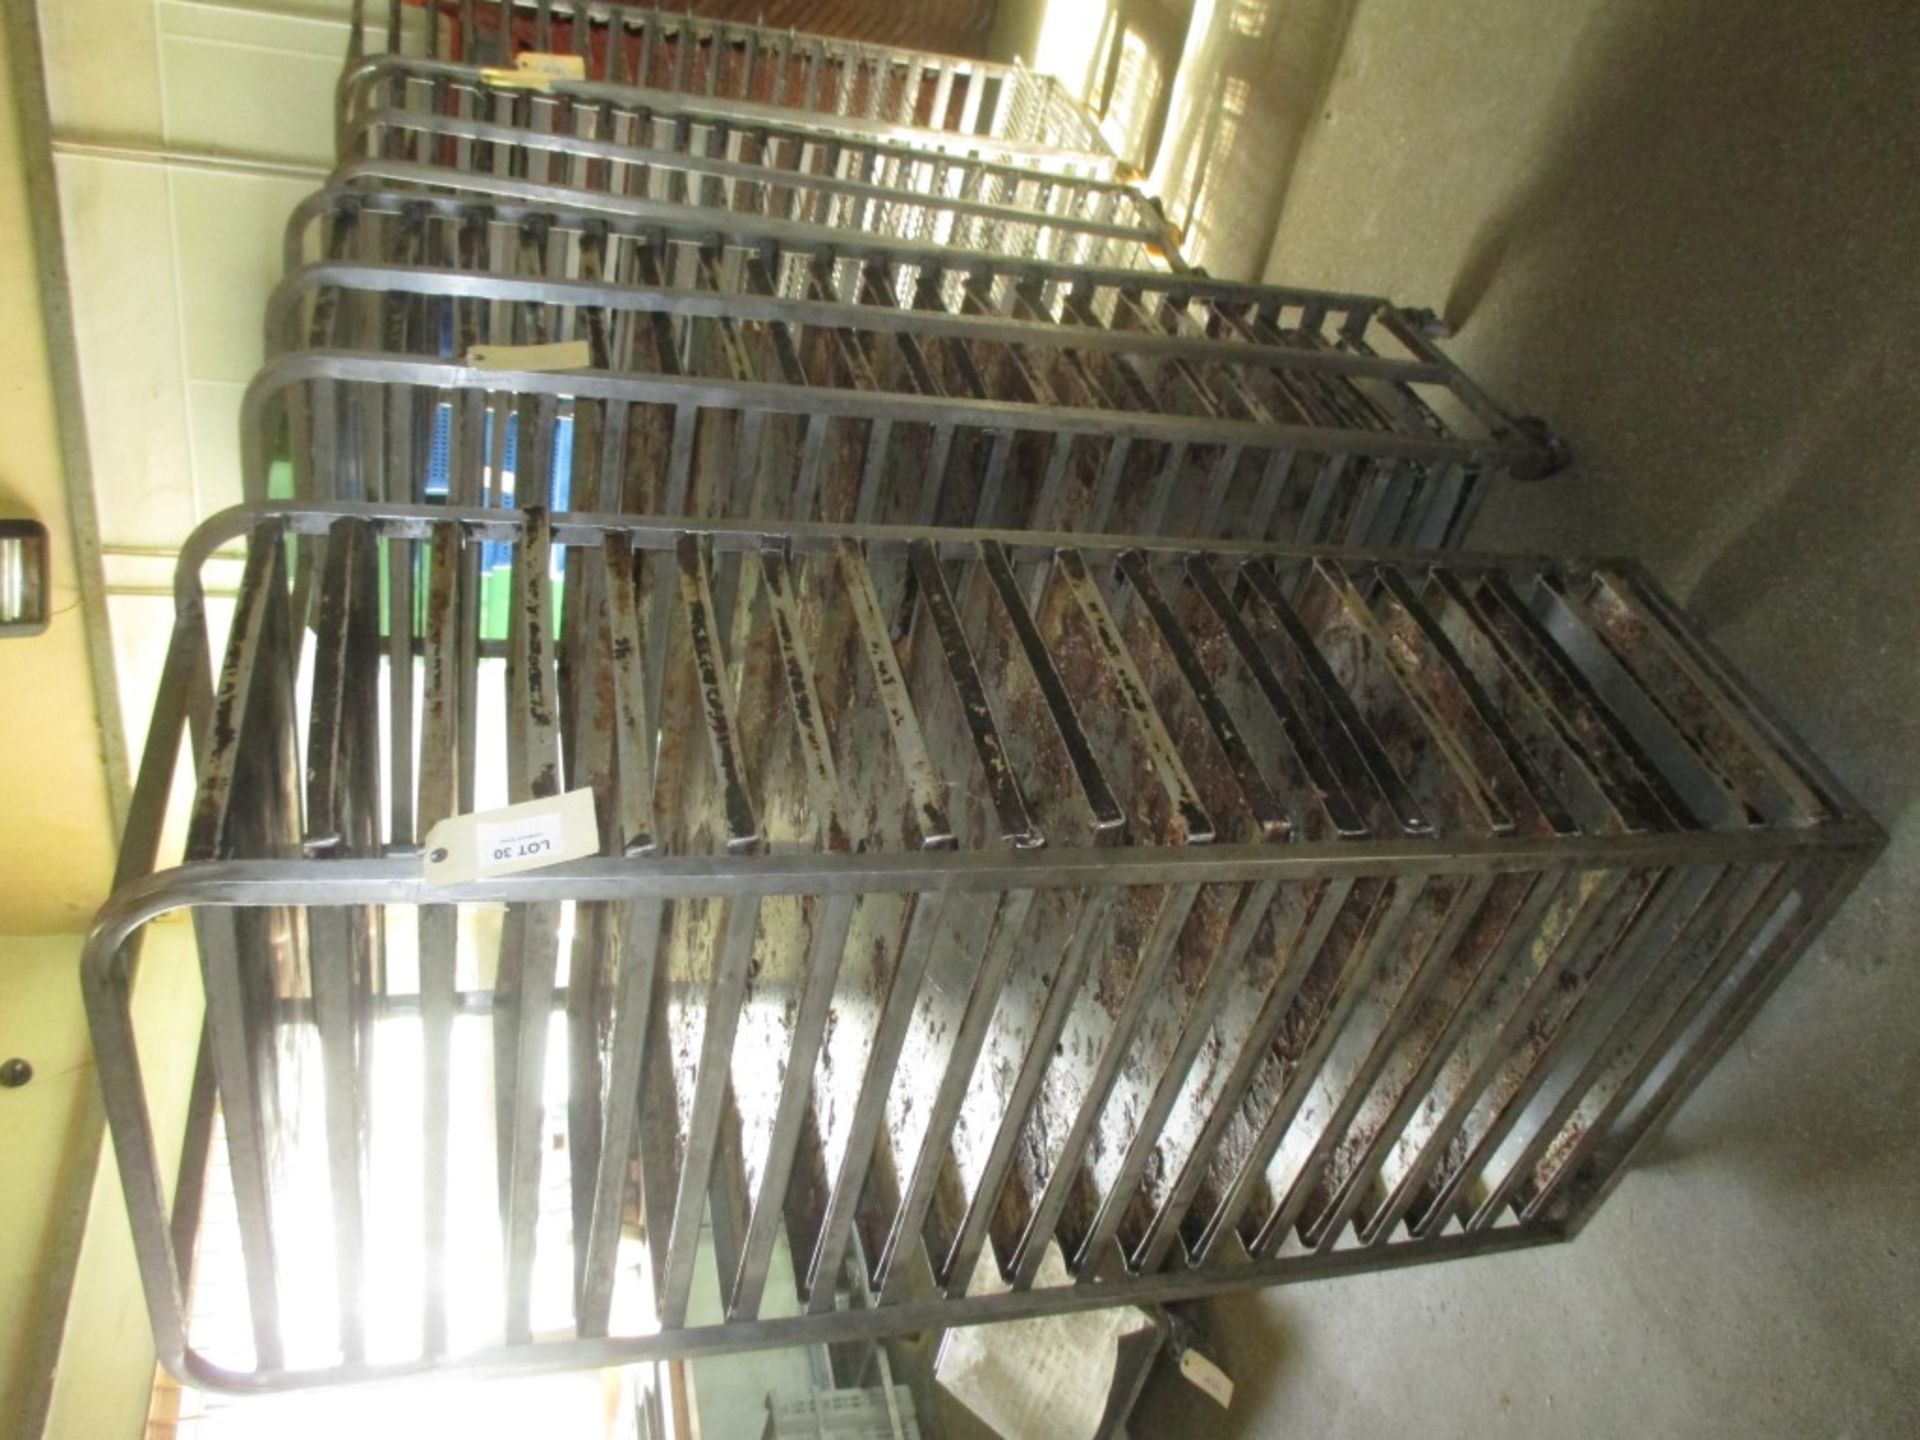 2 Metal trolleys with – 20 baking trays per trolley